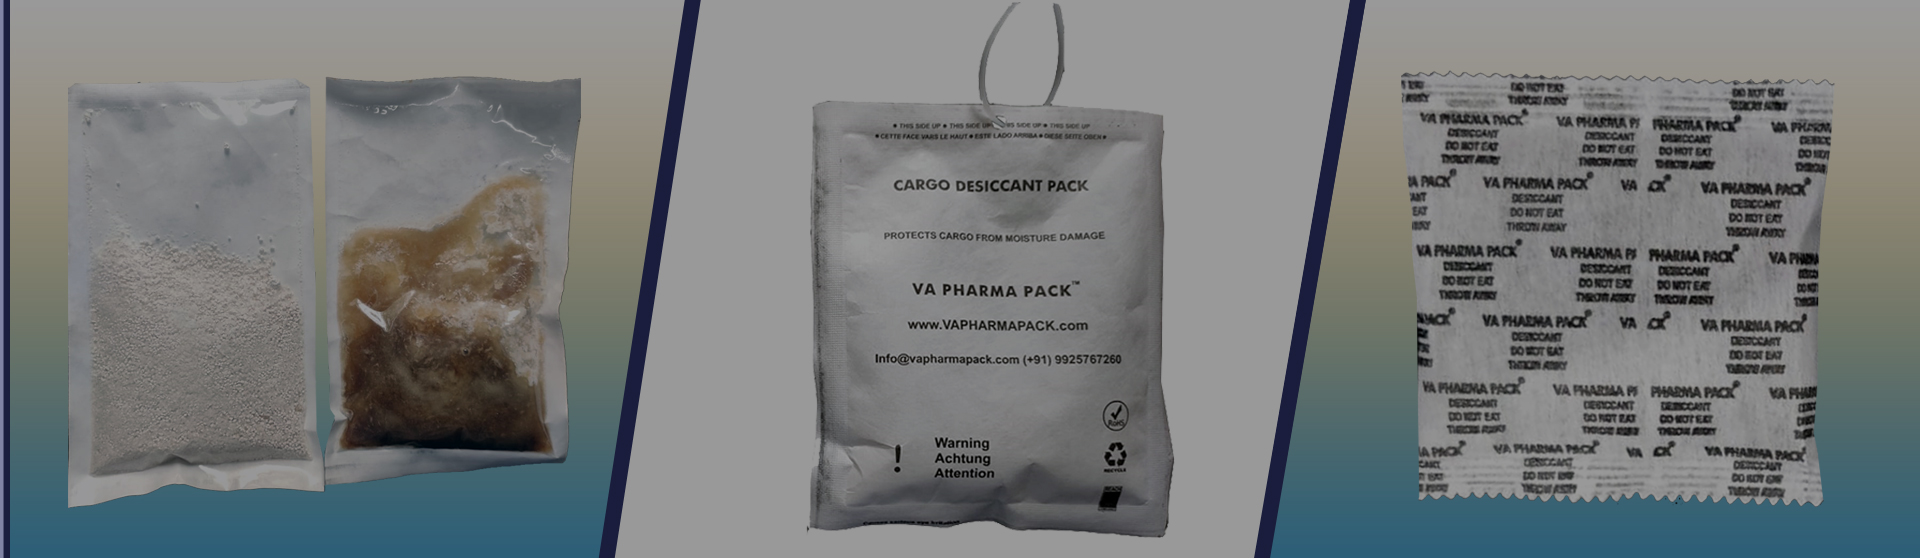 VA_Pharma pack